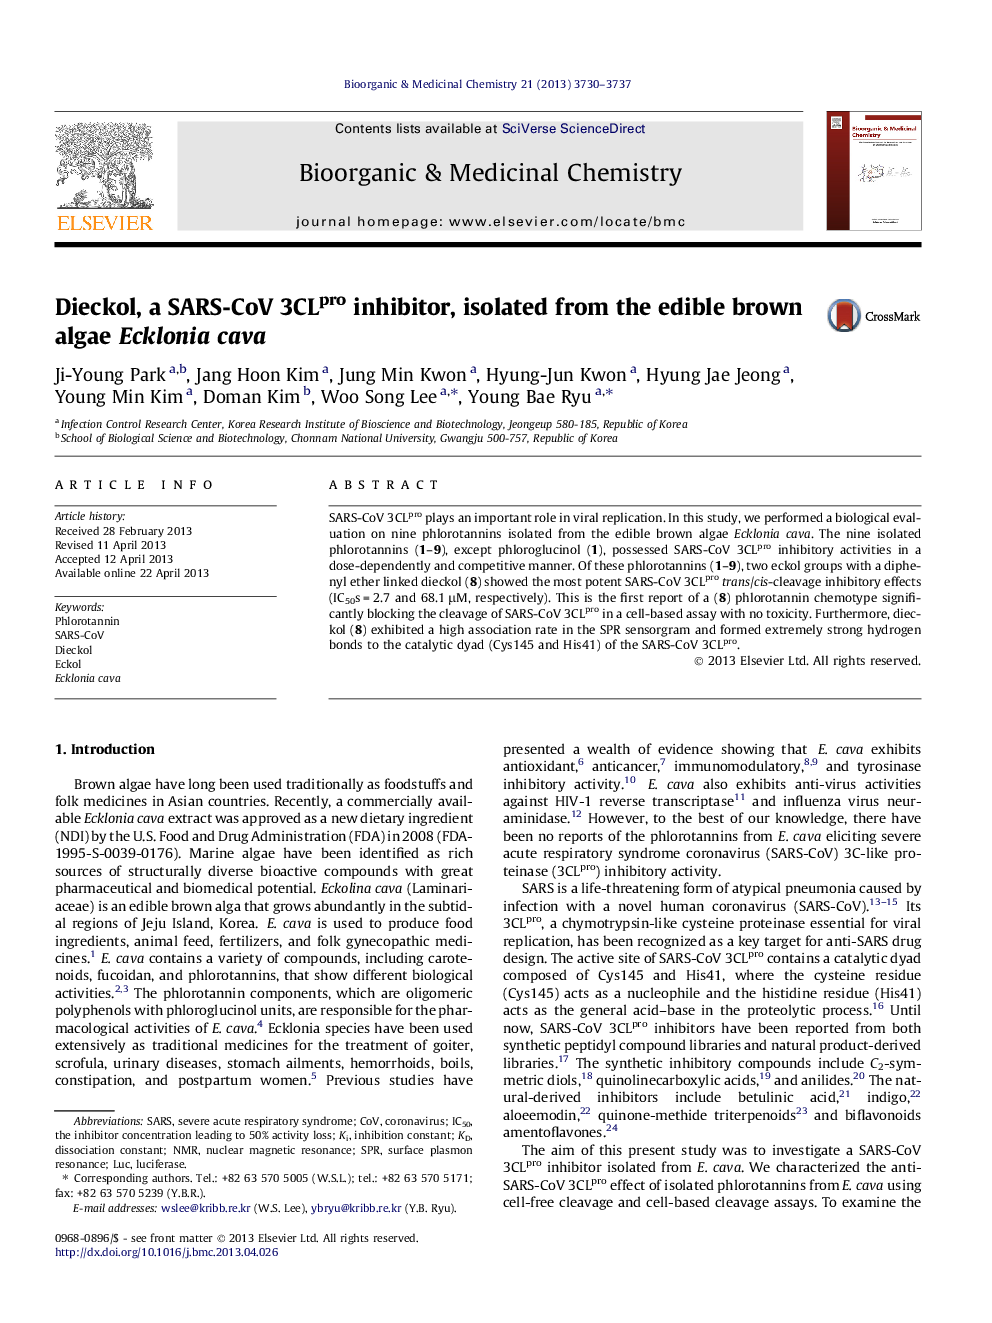 Dieckol, a SARS-CoV 3CLpro inhibitor, isolated from the edible brown algae Ecklonia cava